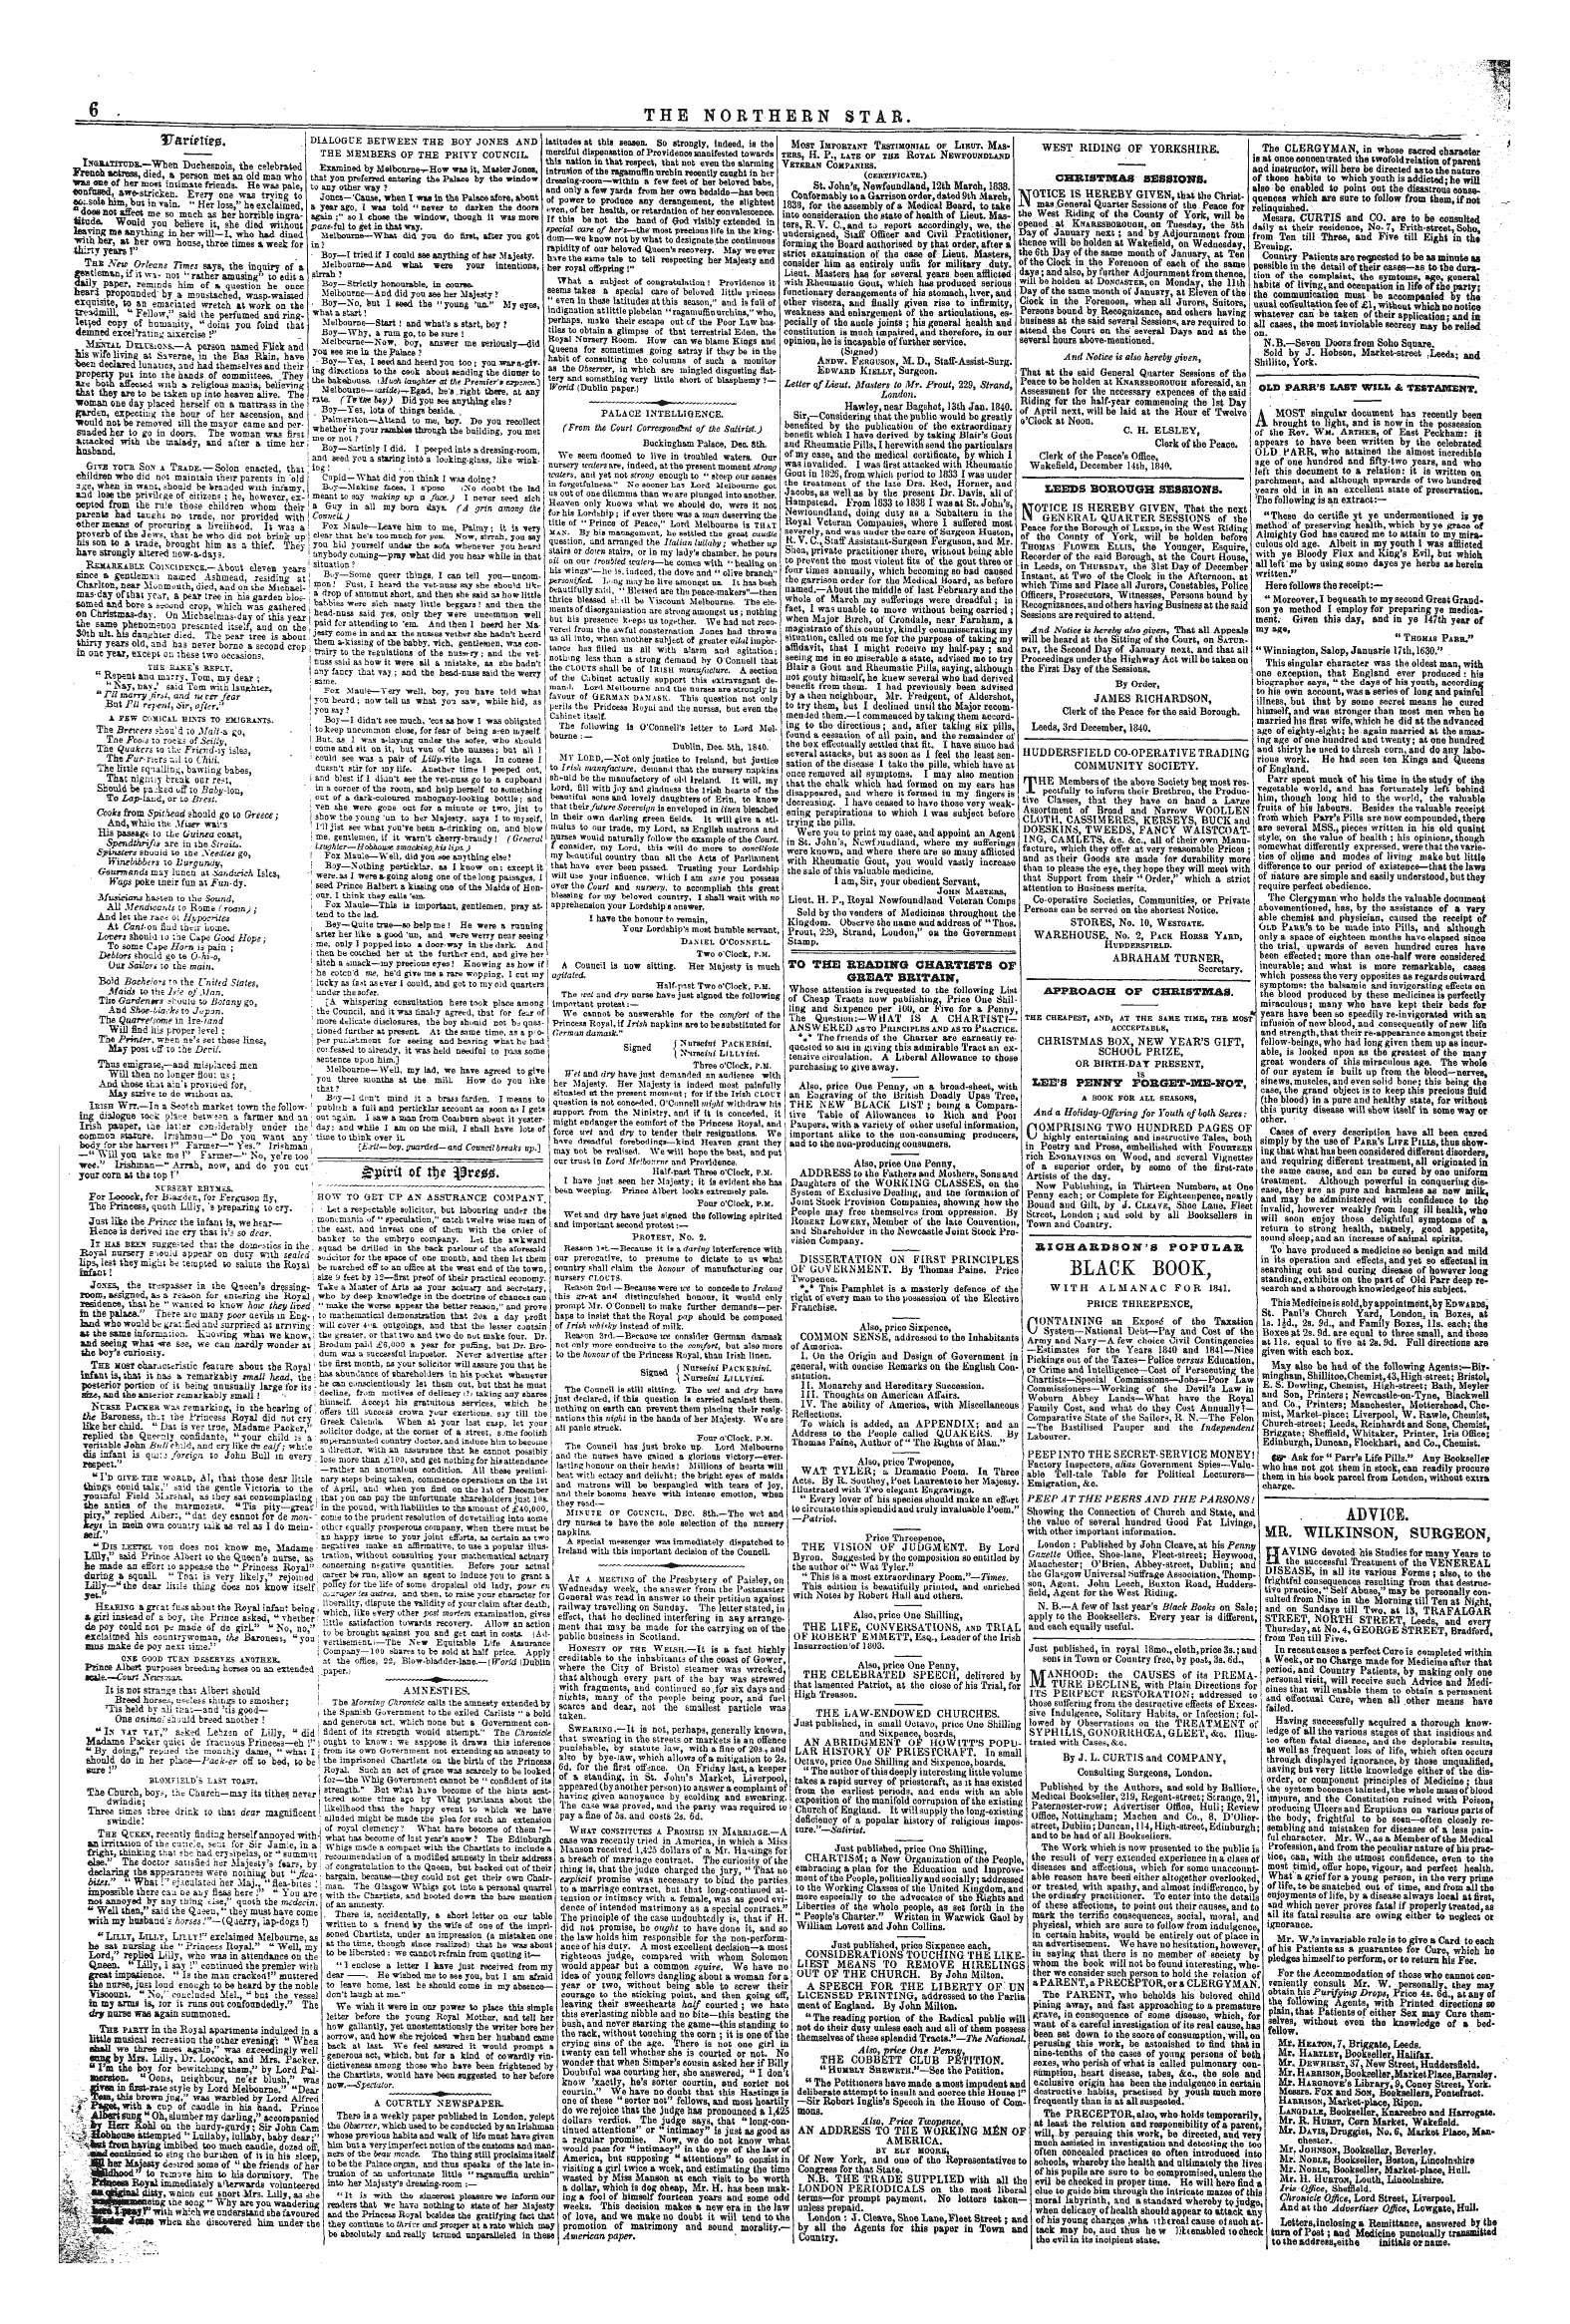 Northern Star (1837-1852): jS F Y, 1st edition - ^ Ptrtt Tt)C 39«Ft&.